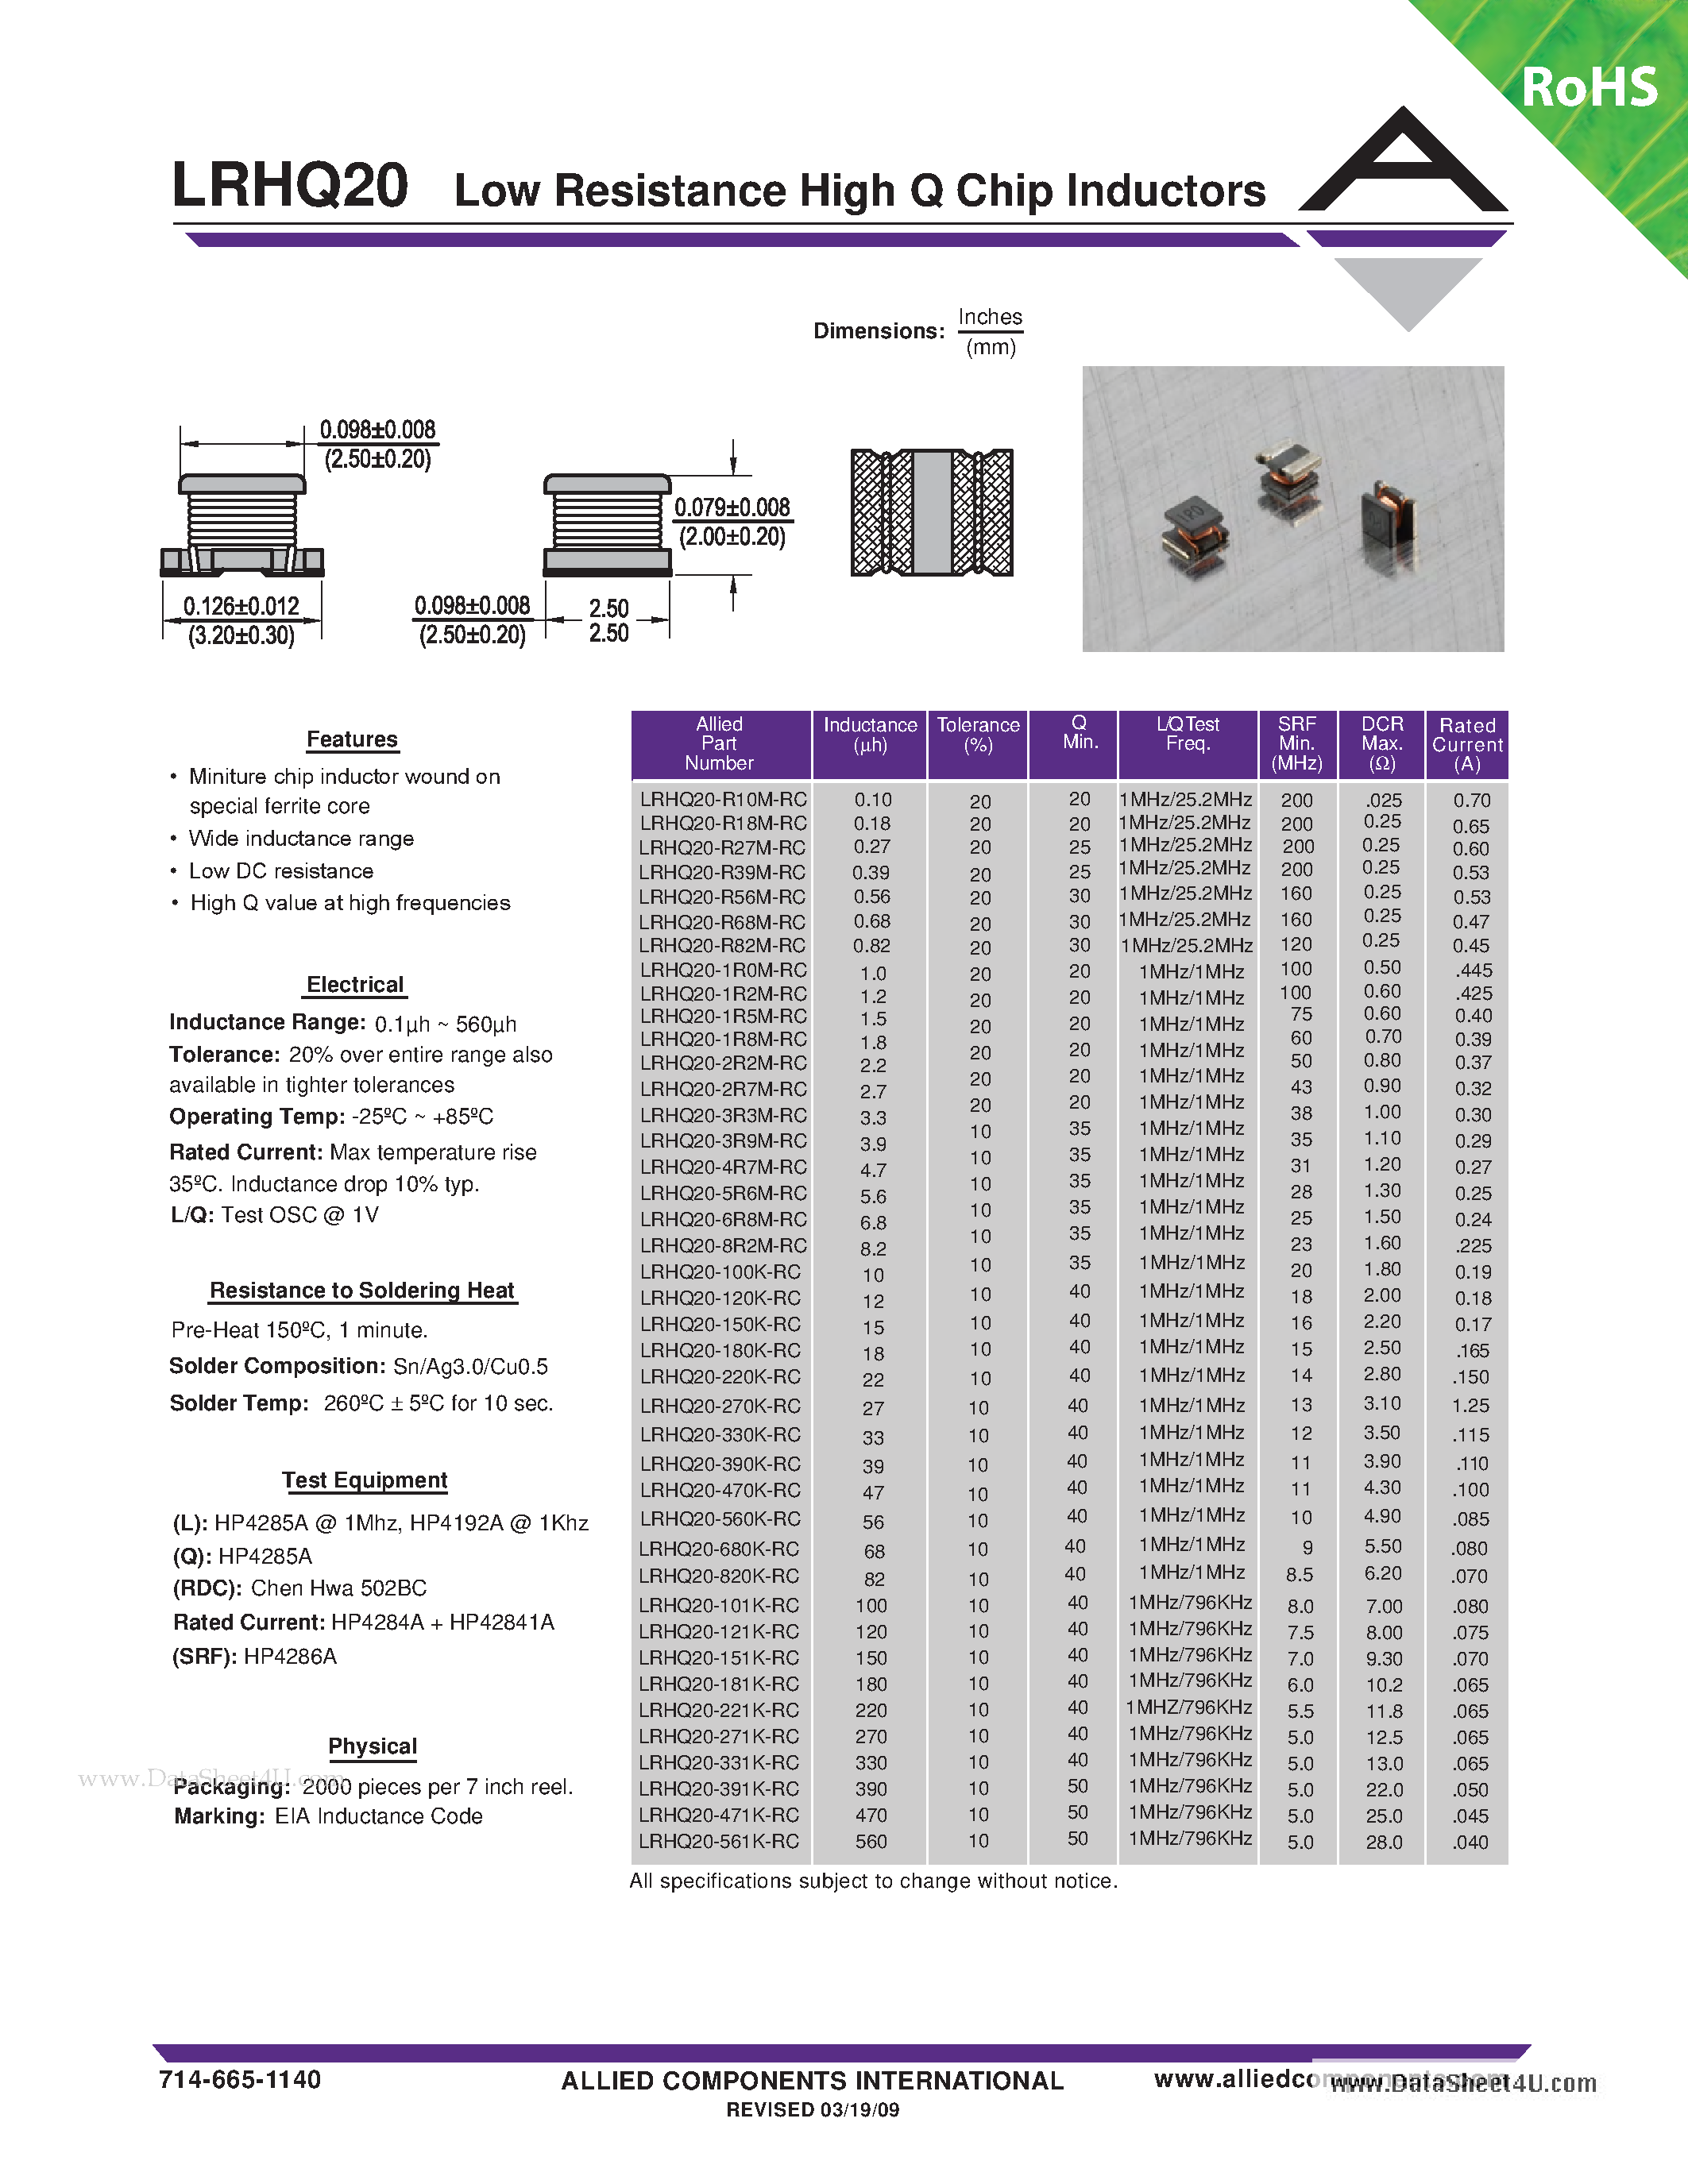 Даташит LRHQ20 - Low Resistance High Q Chip Inductors страница 1